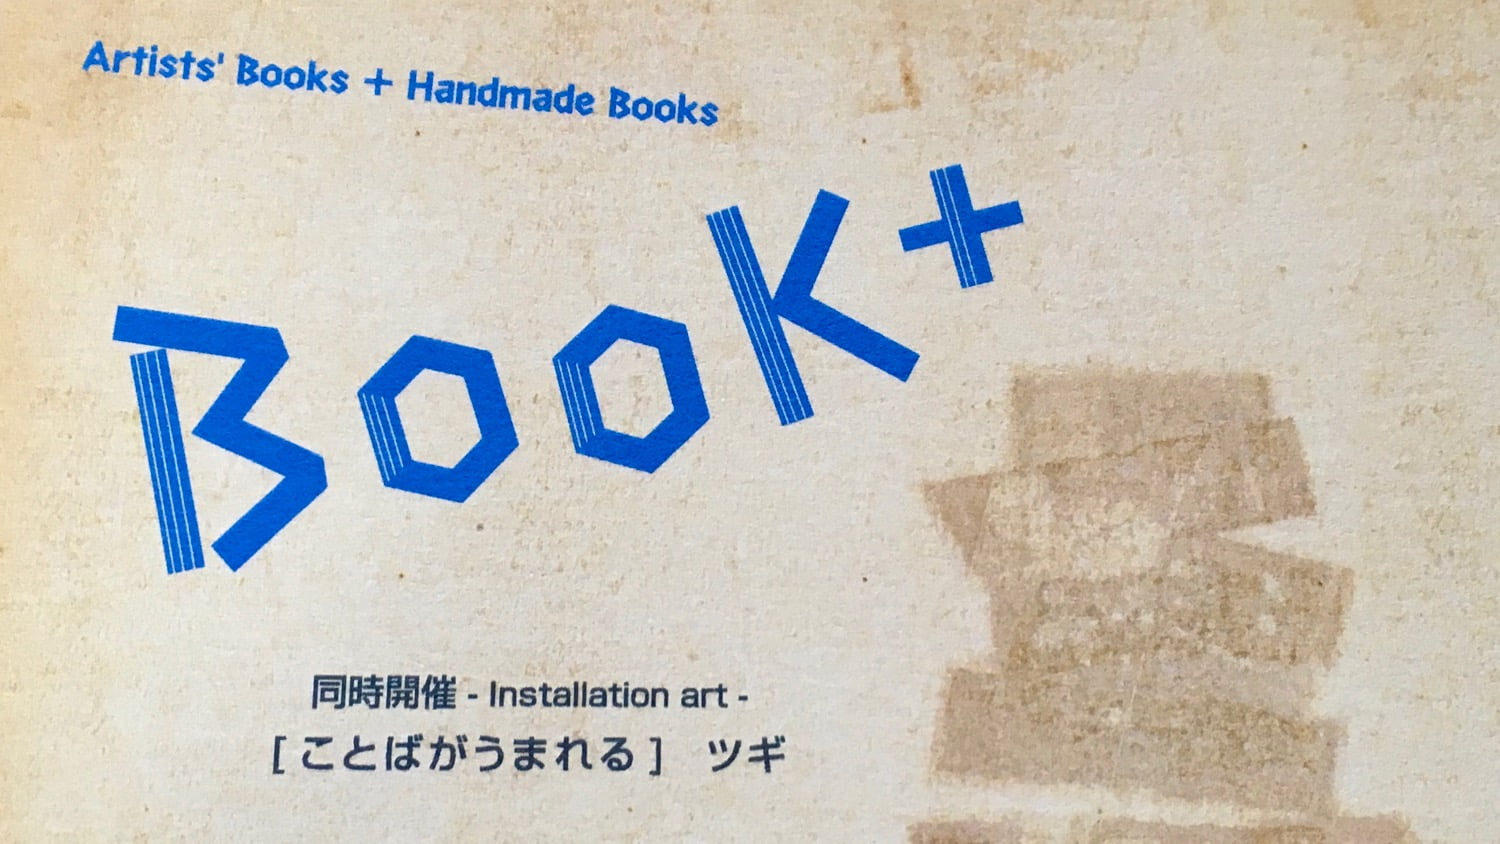 Book+ Artist's Books + Handmade Books